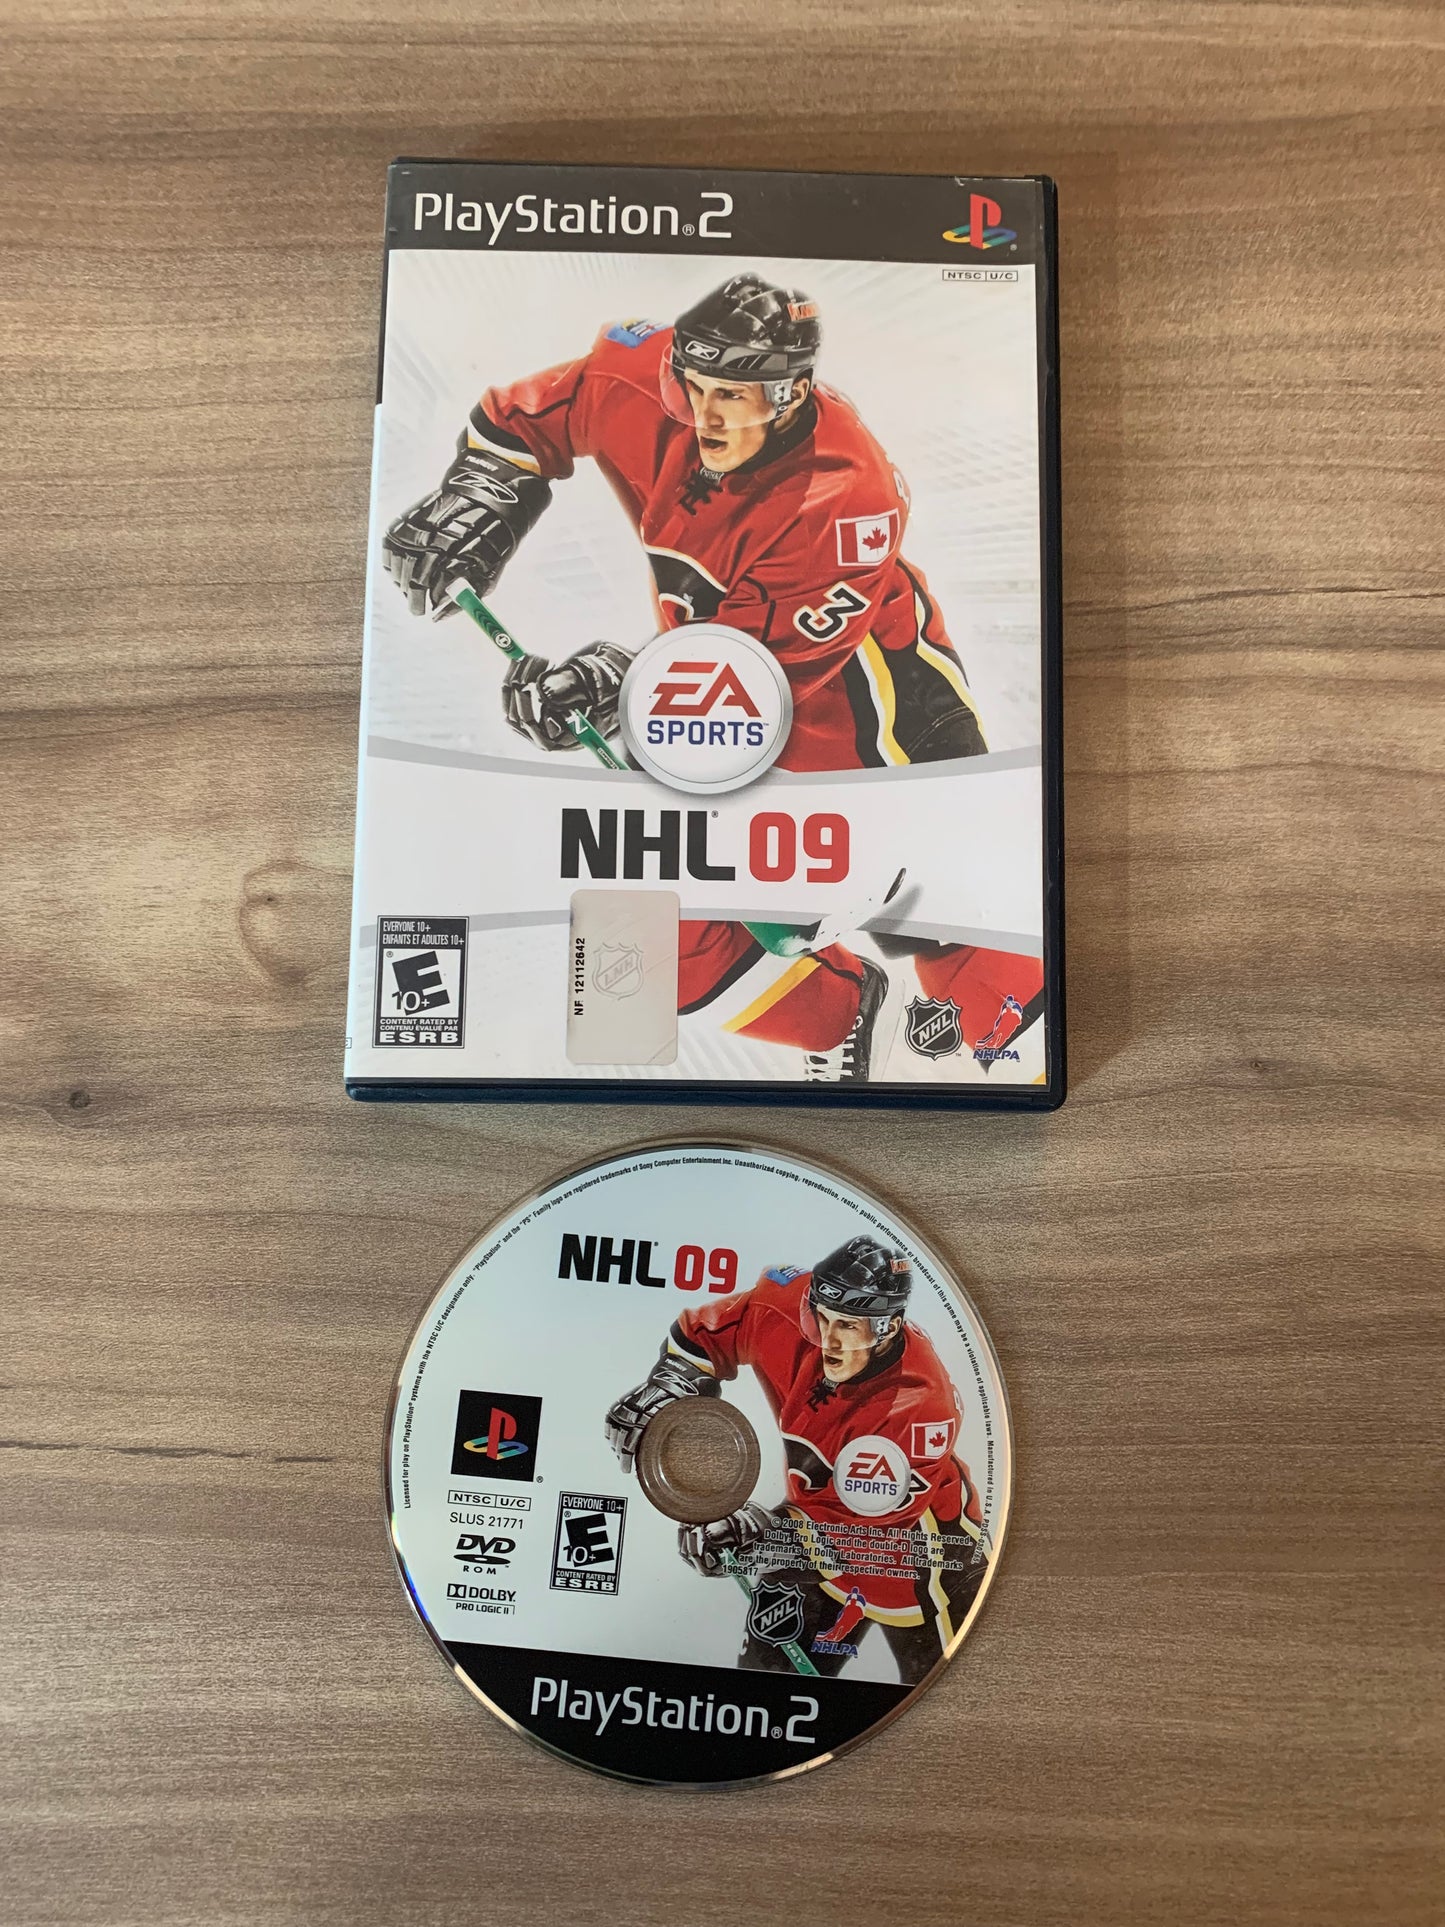 PiXEL-RETRO.COM : SONY PLAYSTATION 2 (PS2) COMPLET CIB BOX MANUAL GAME NTSC NHL 09